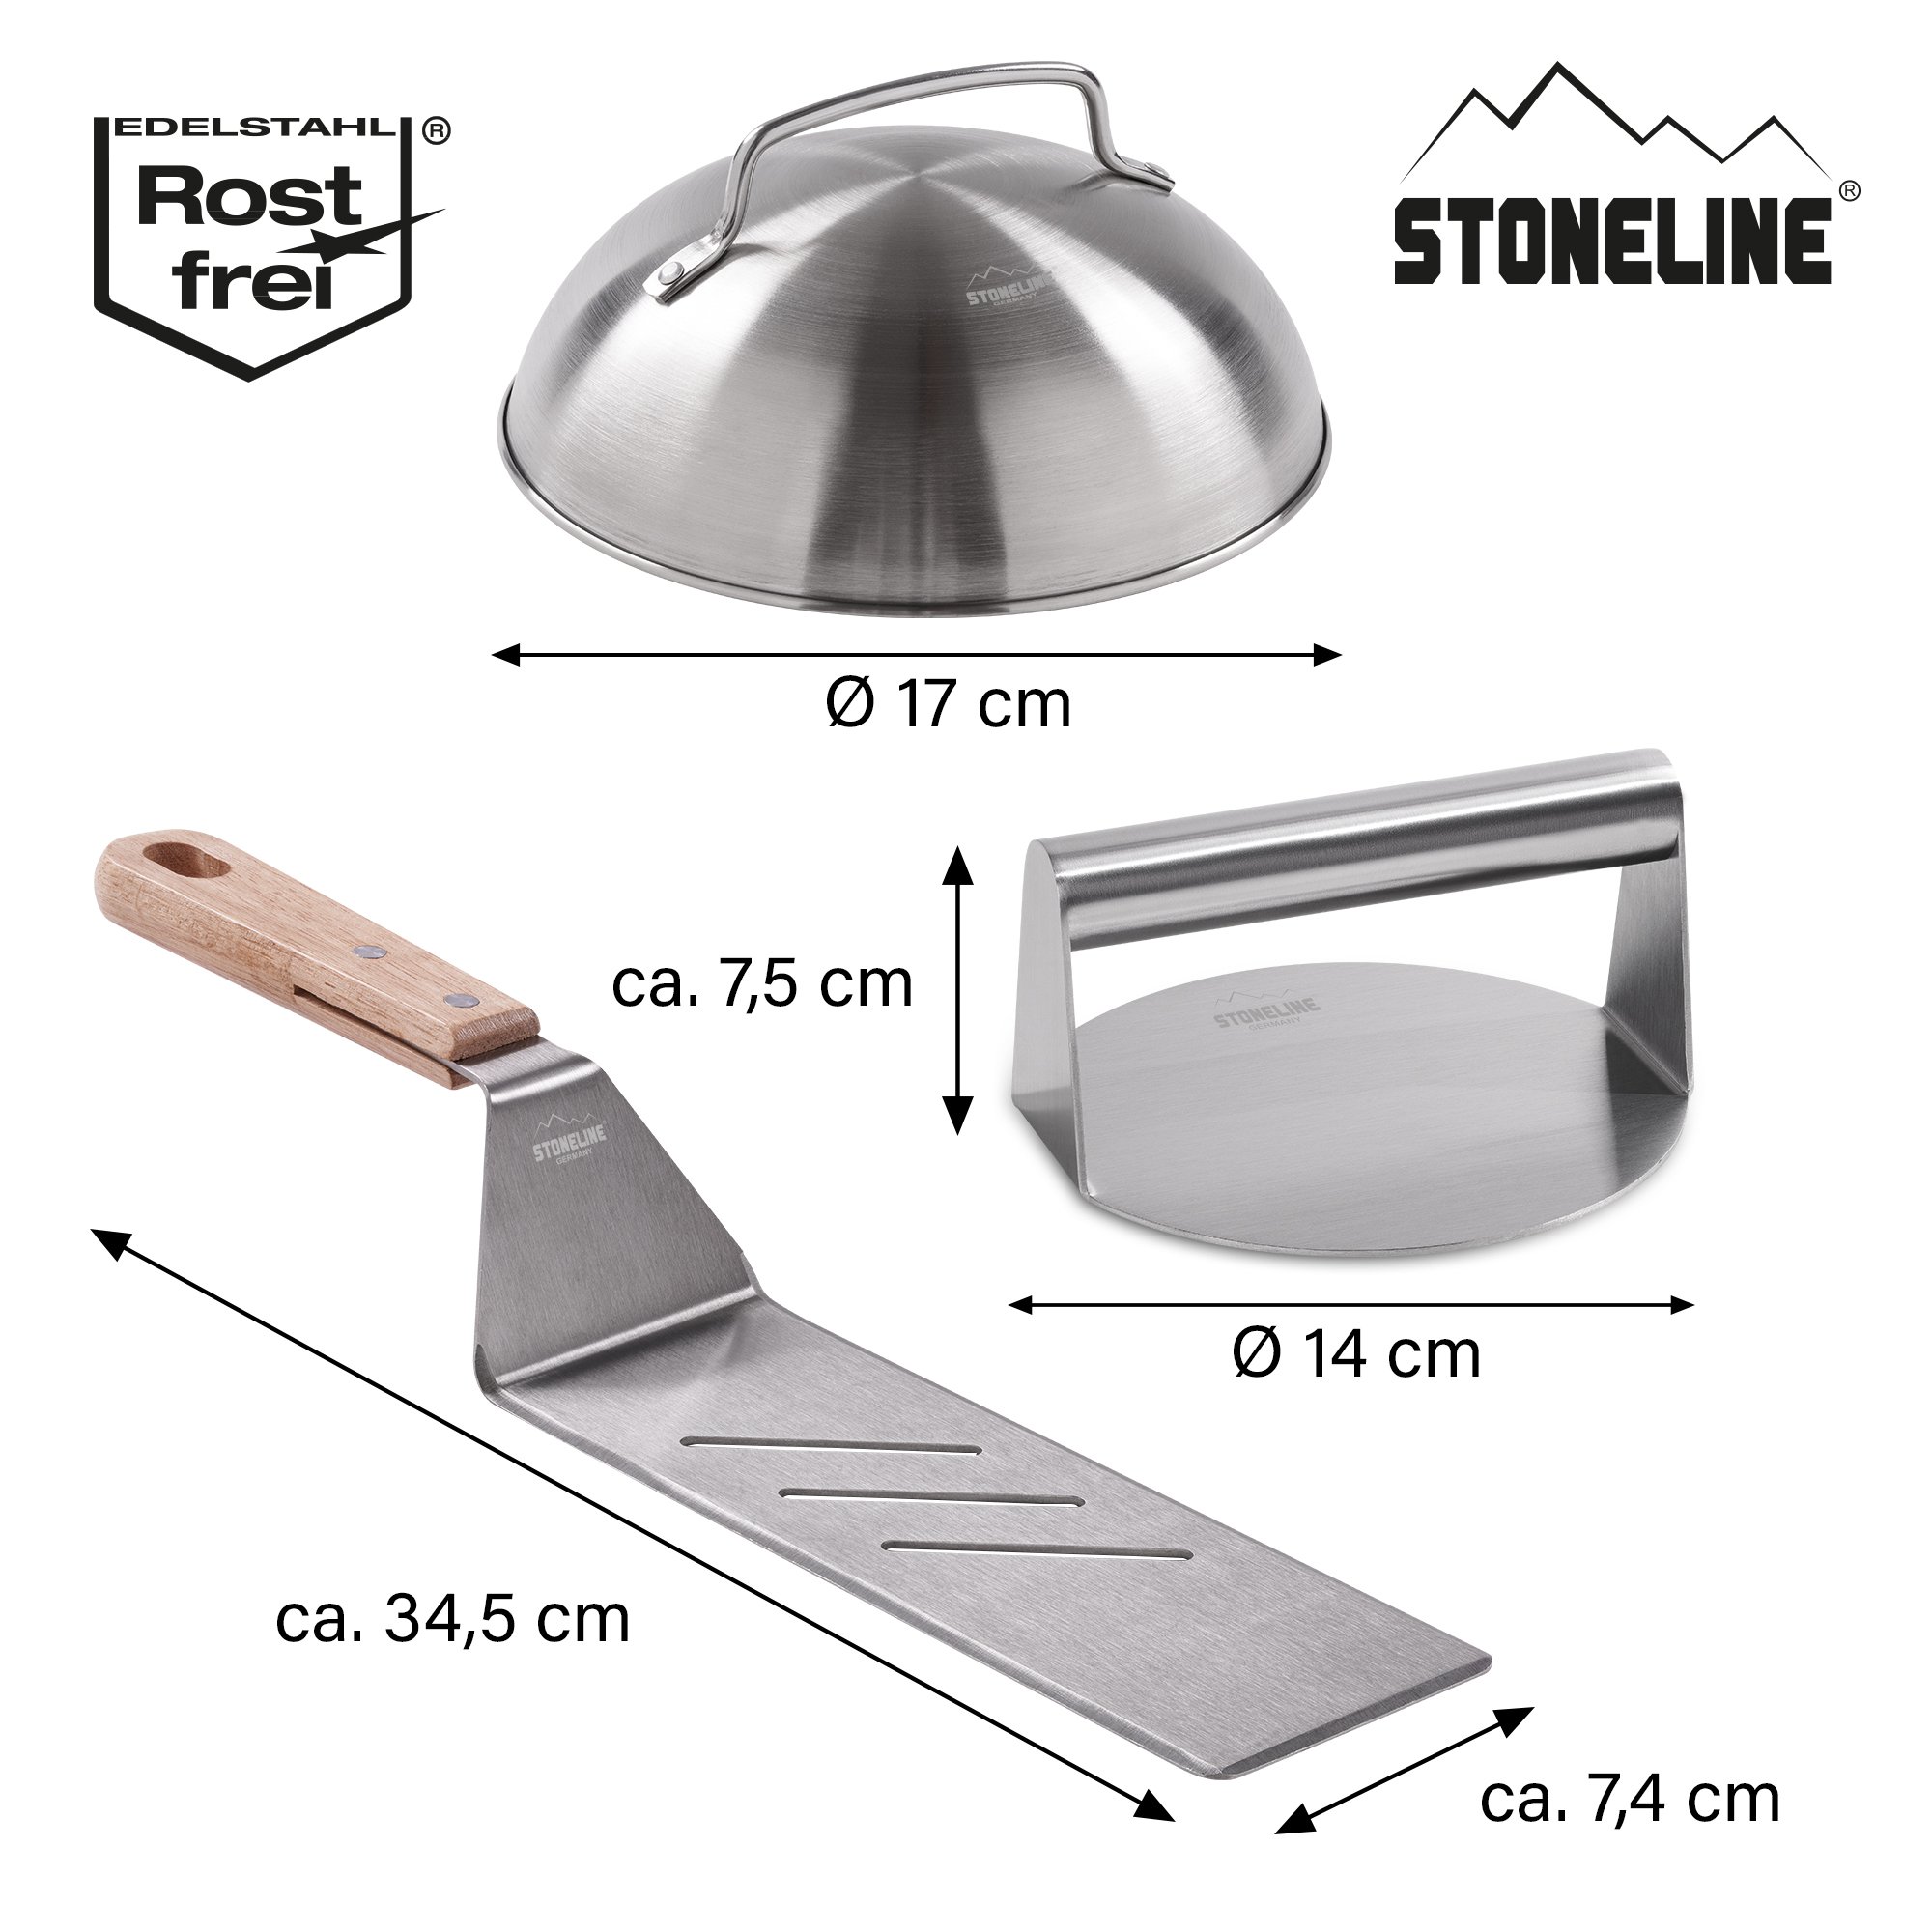 STONELINE® 3 pc Smash Burger Set, Burger Press, Spatula, Melting Dome Stainless Steel